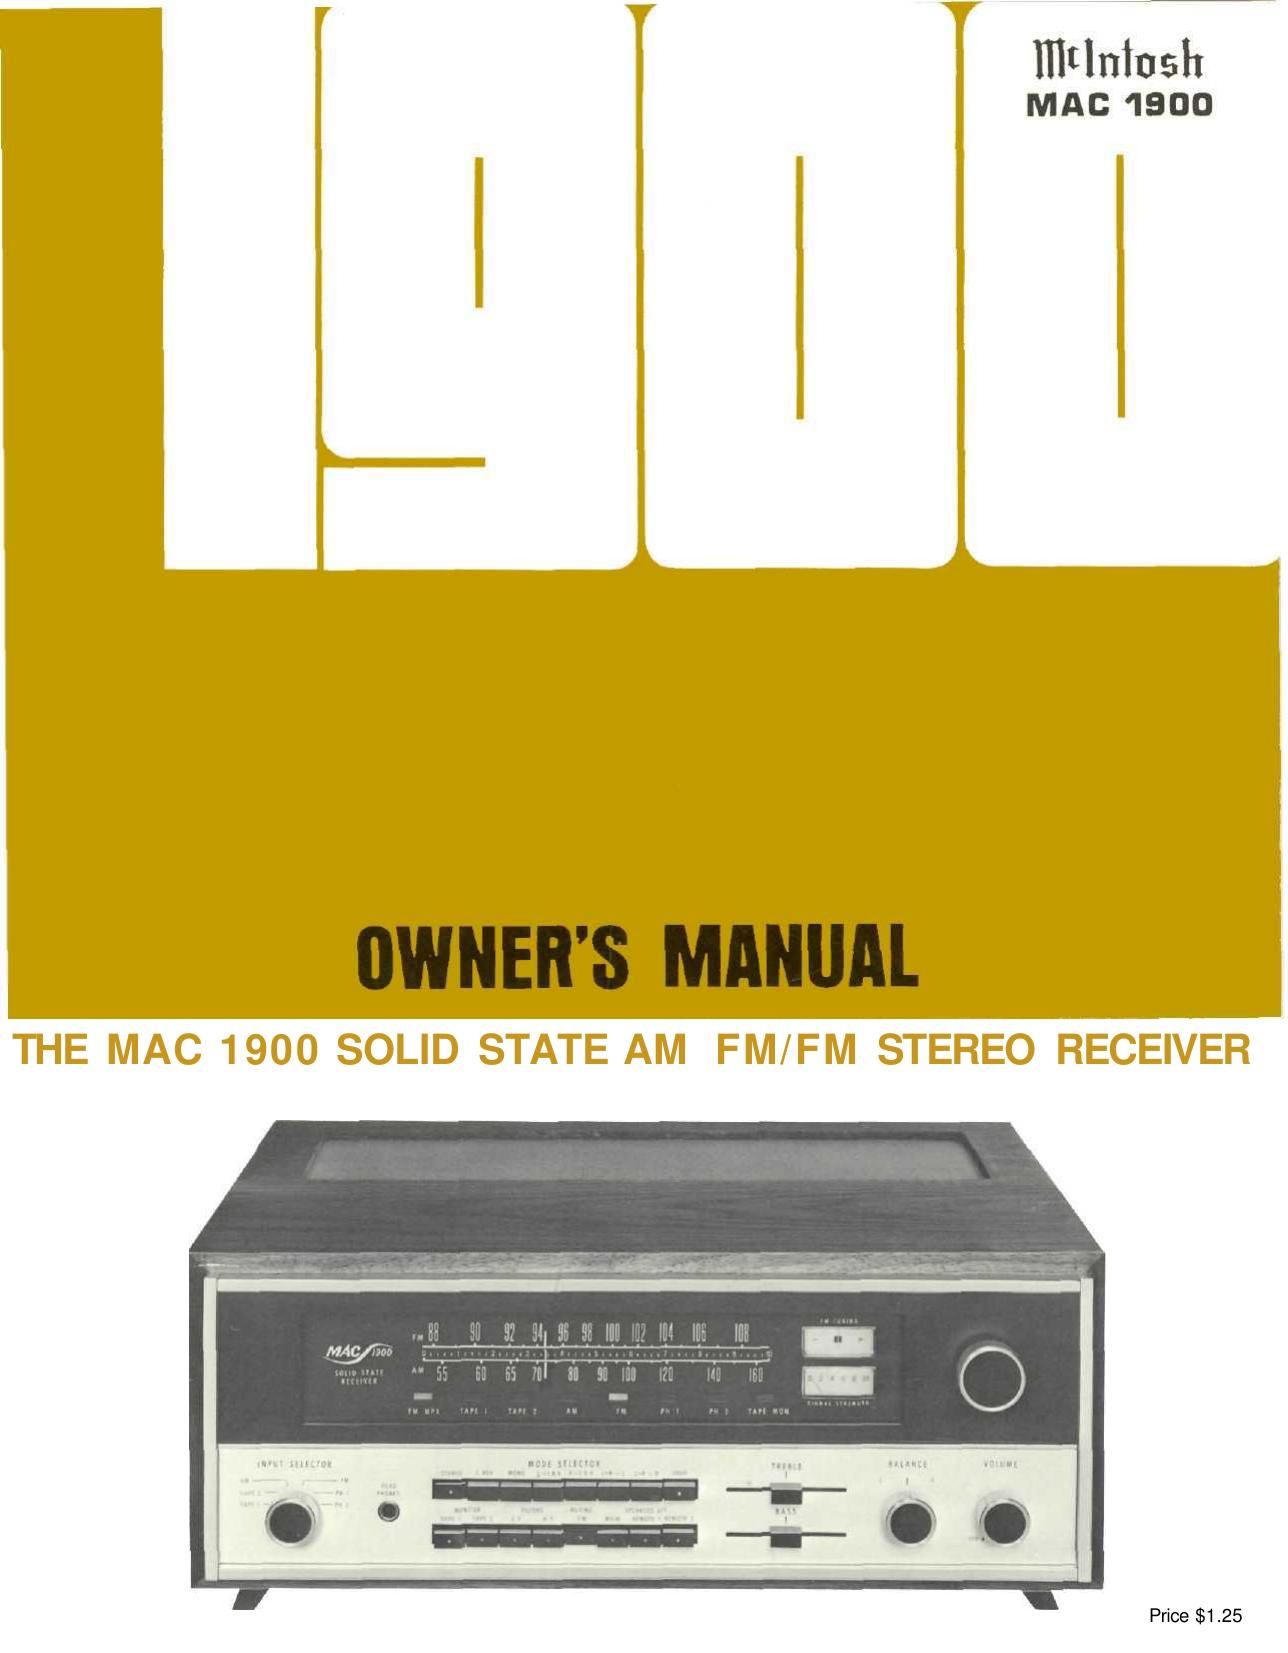 McIntosh MAC 1900 Owners Manual